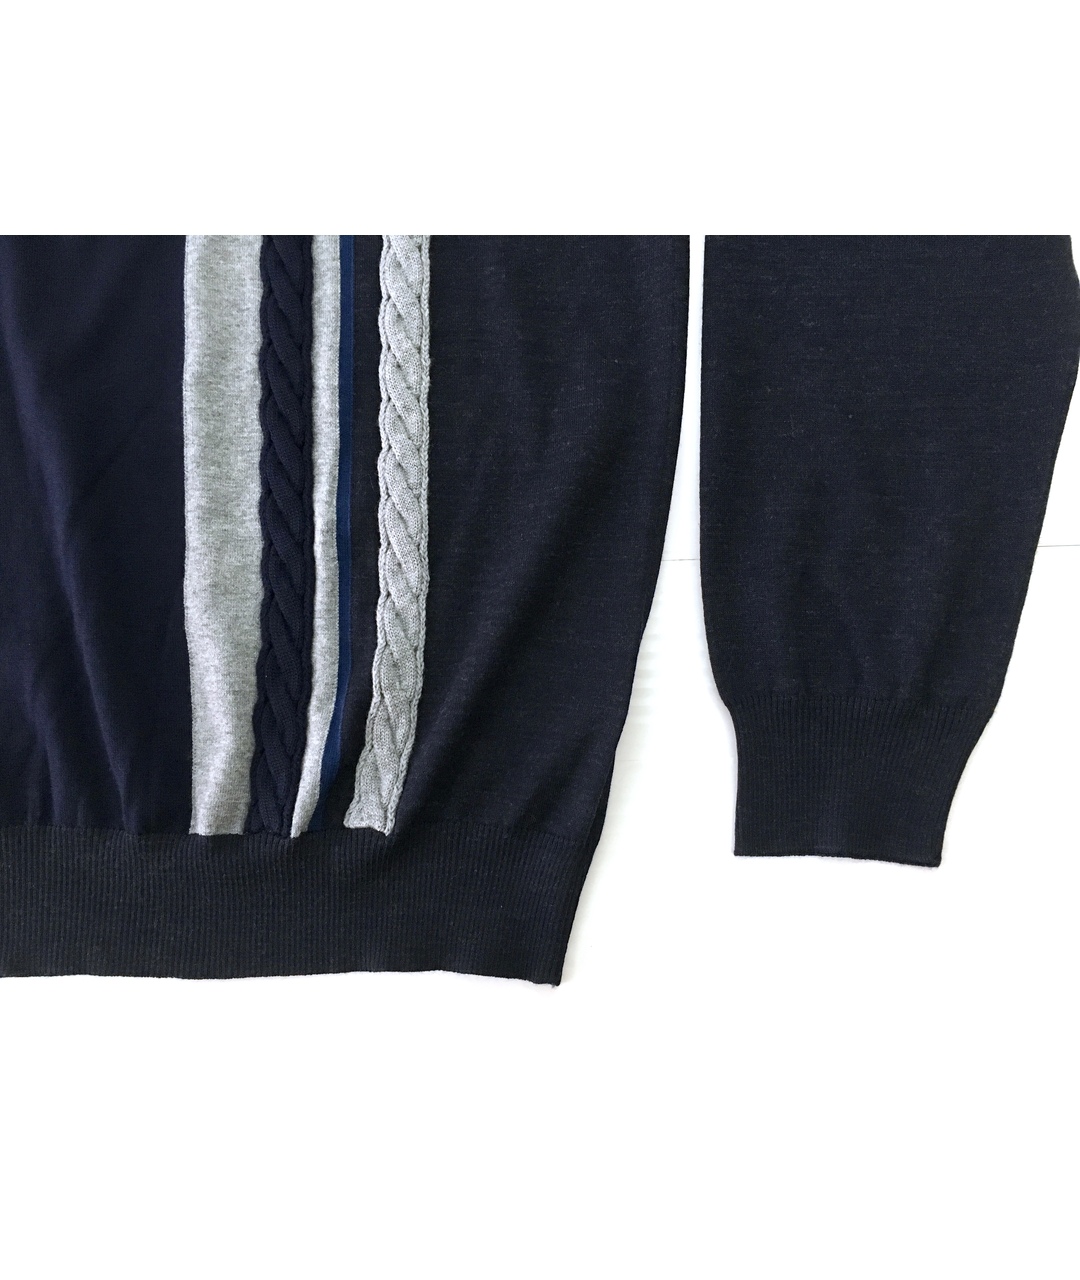 BILANCIONI Темно-синий шерстяной джемпер / свитер, фото 5